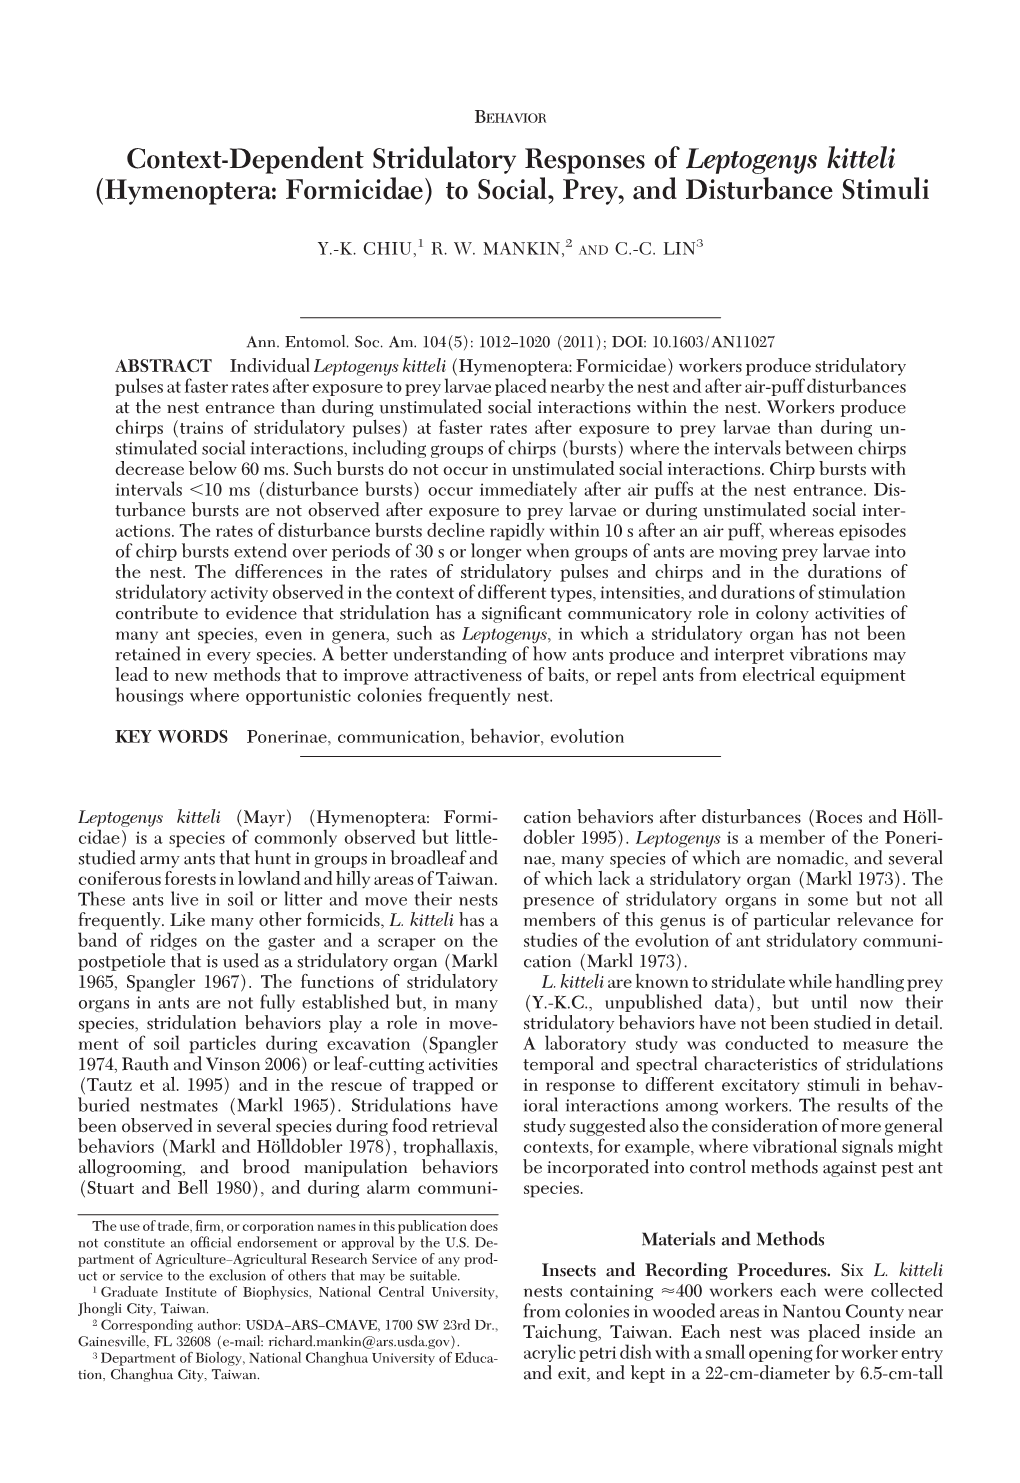 Context-Dependent Stridulatory Responses of Leptogenys Kitteli (Hymenoptera: Formicidae) to Social, Prey, and Disturbance Stimuli